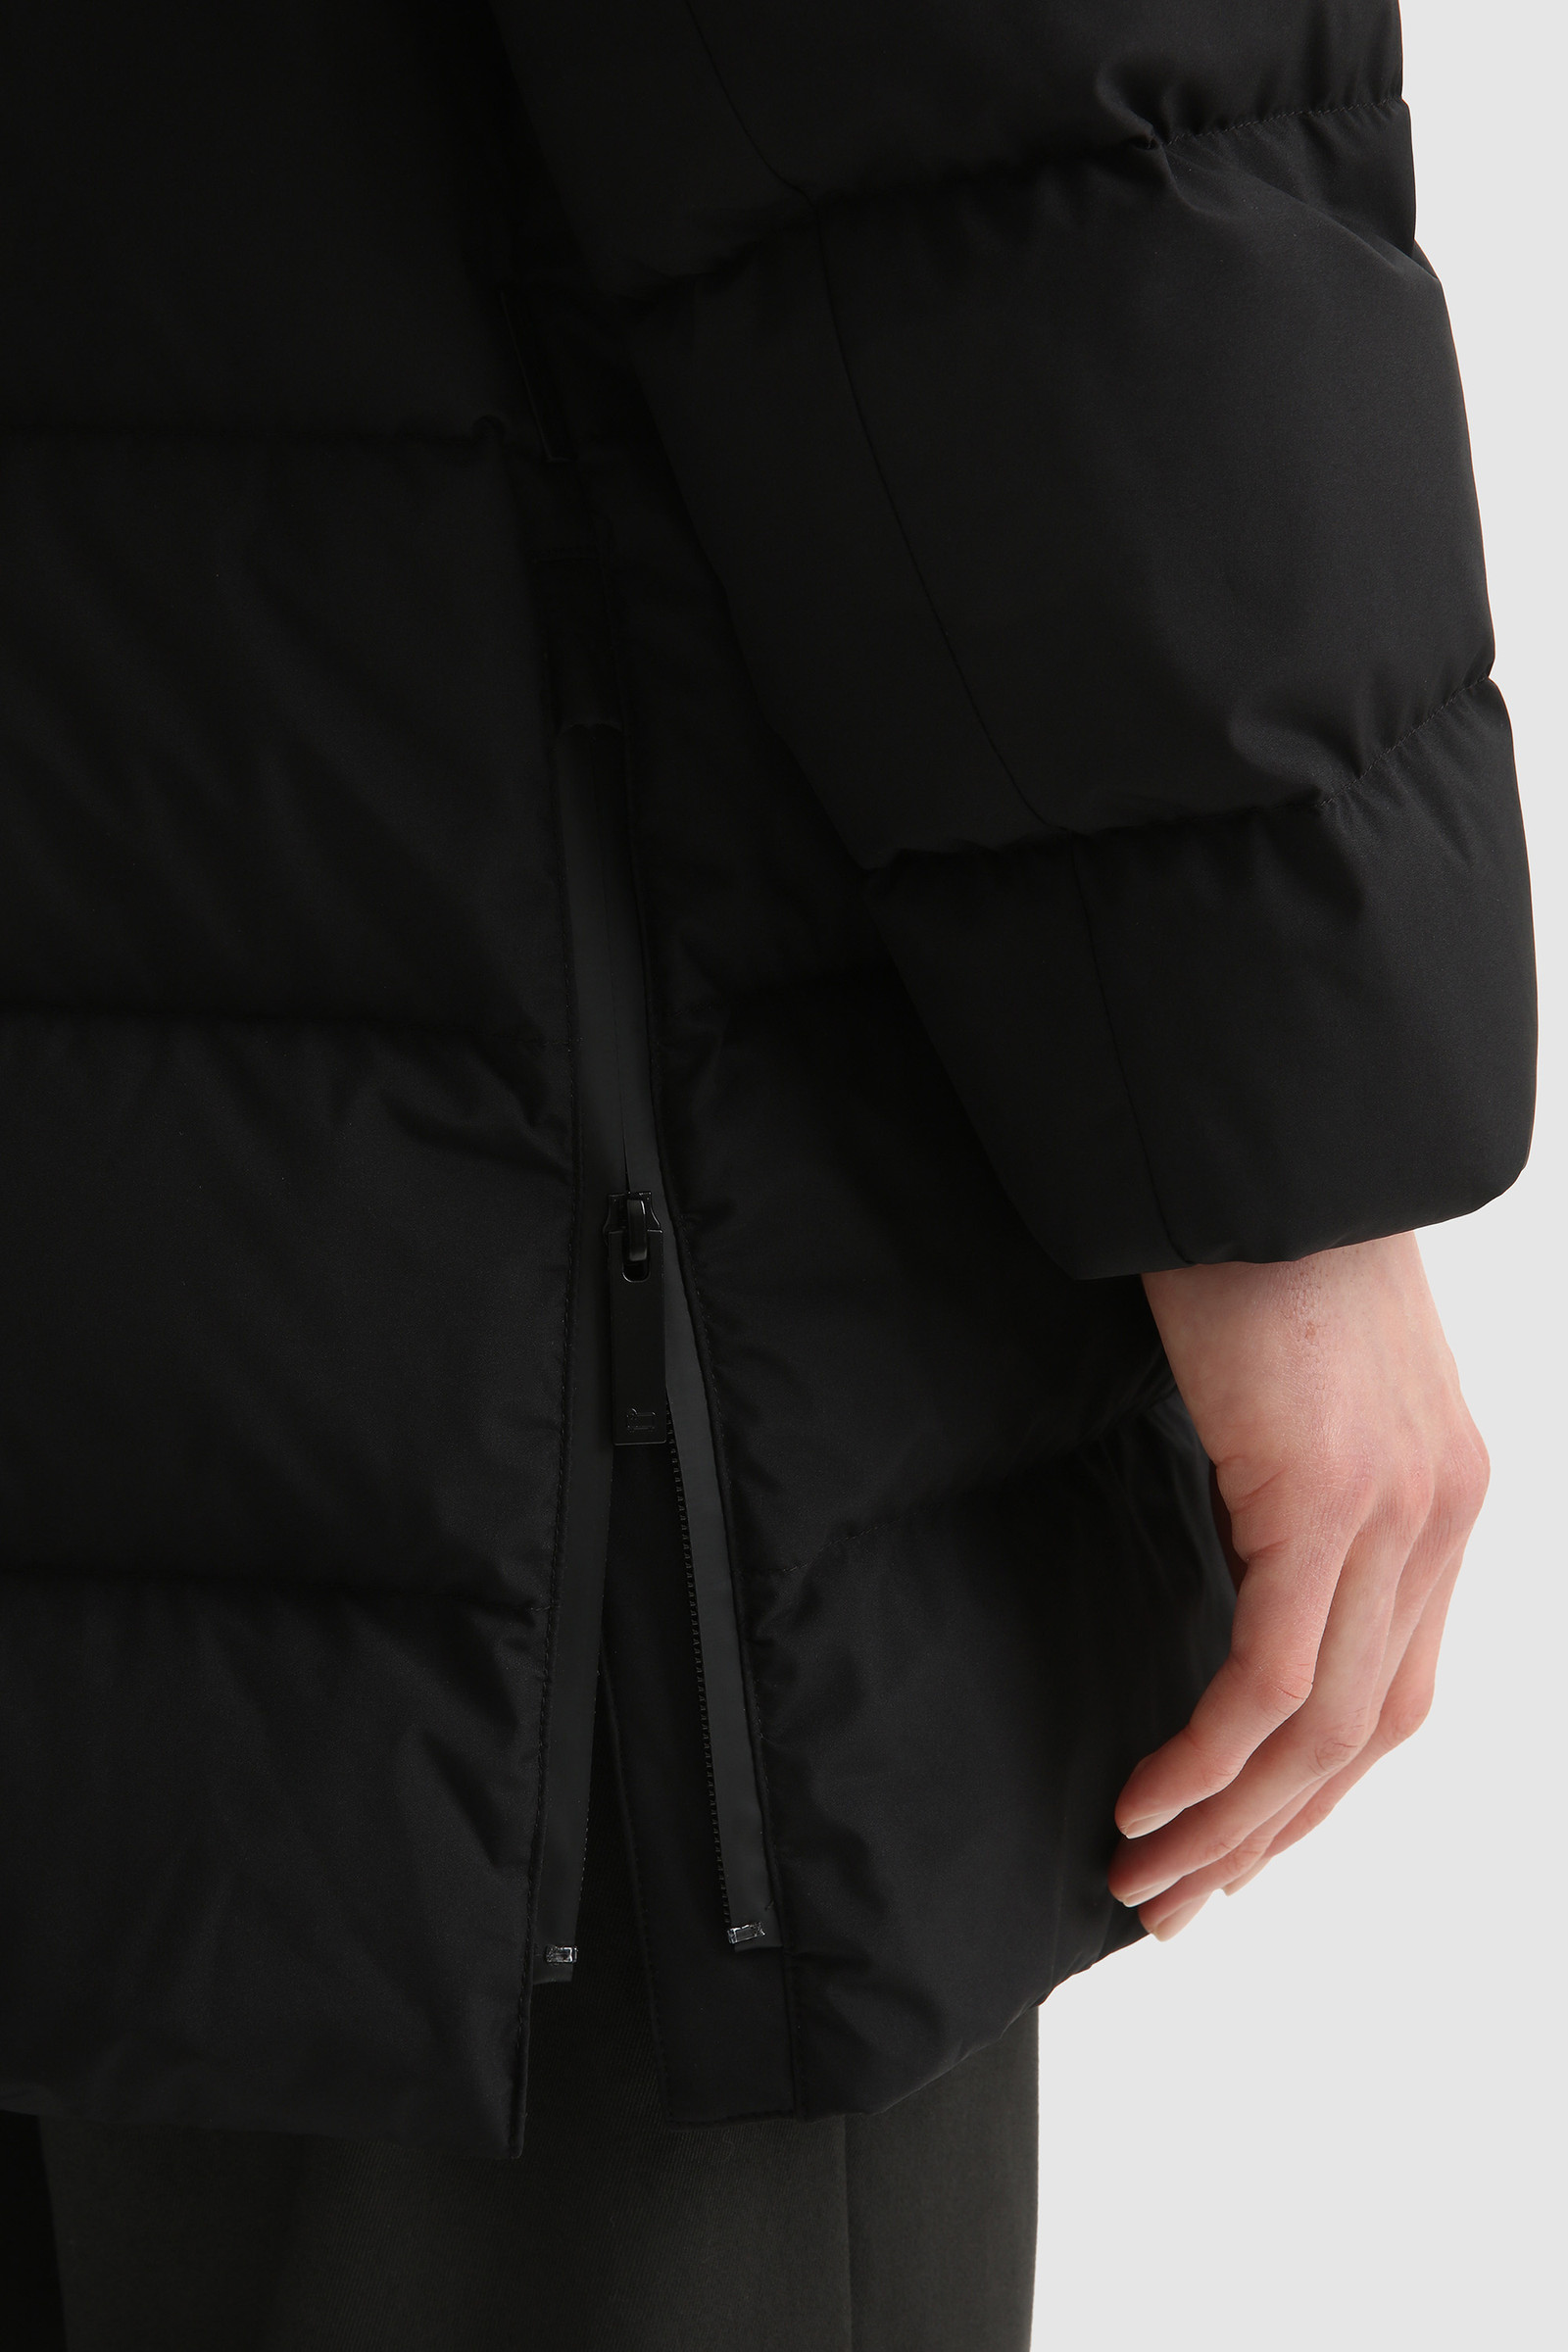 GORE-TEX Infinium High-Tech Quilted Long Jacket - Men - Black